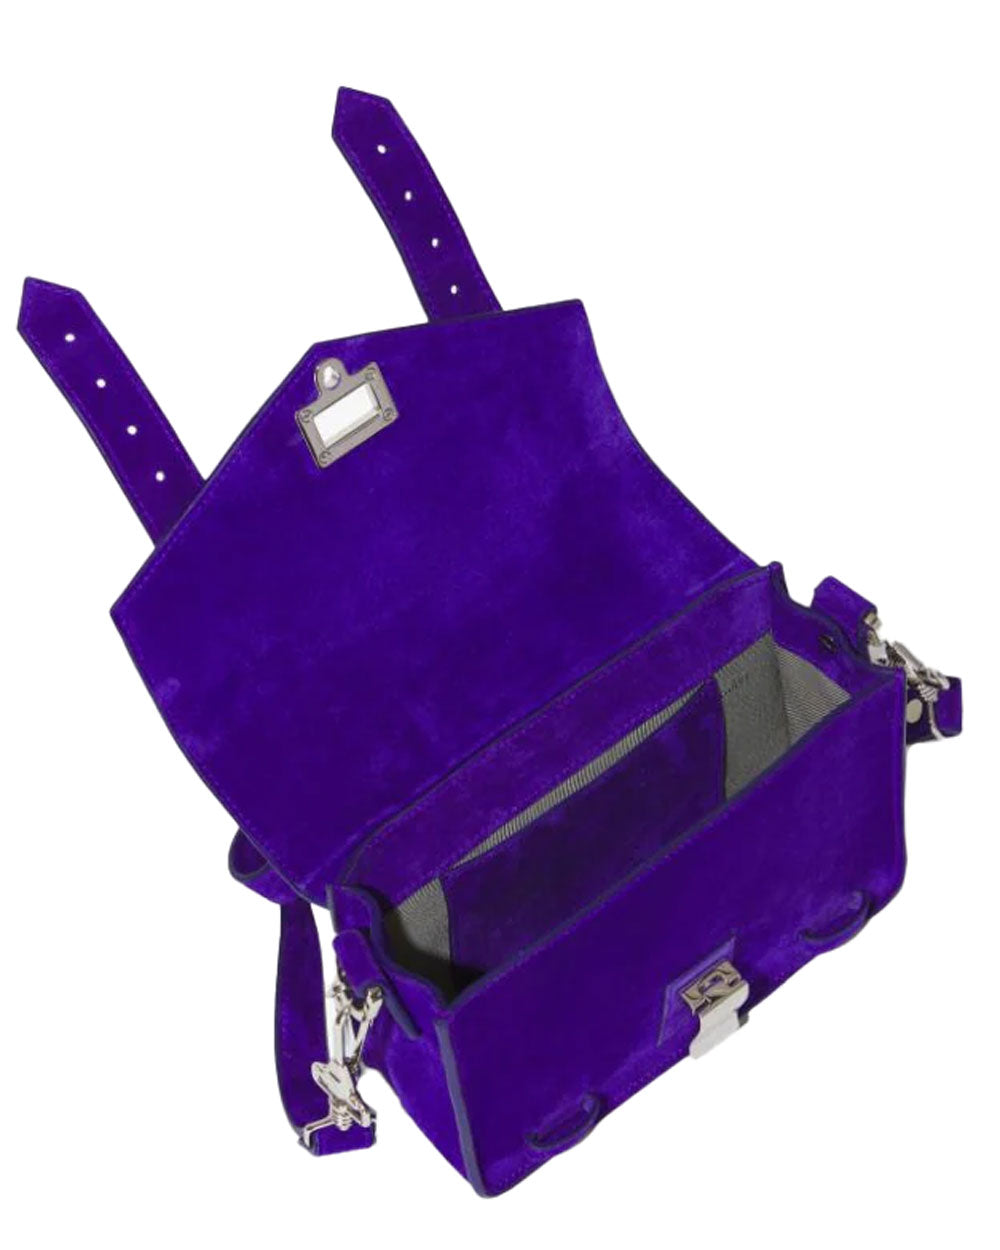 PS1 Mini Crossbody Bag in Dark Indigo Suede